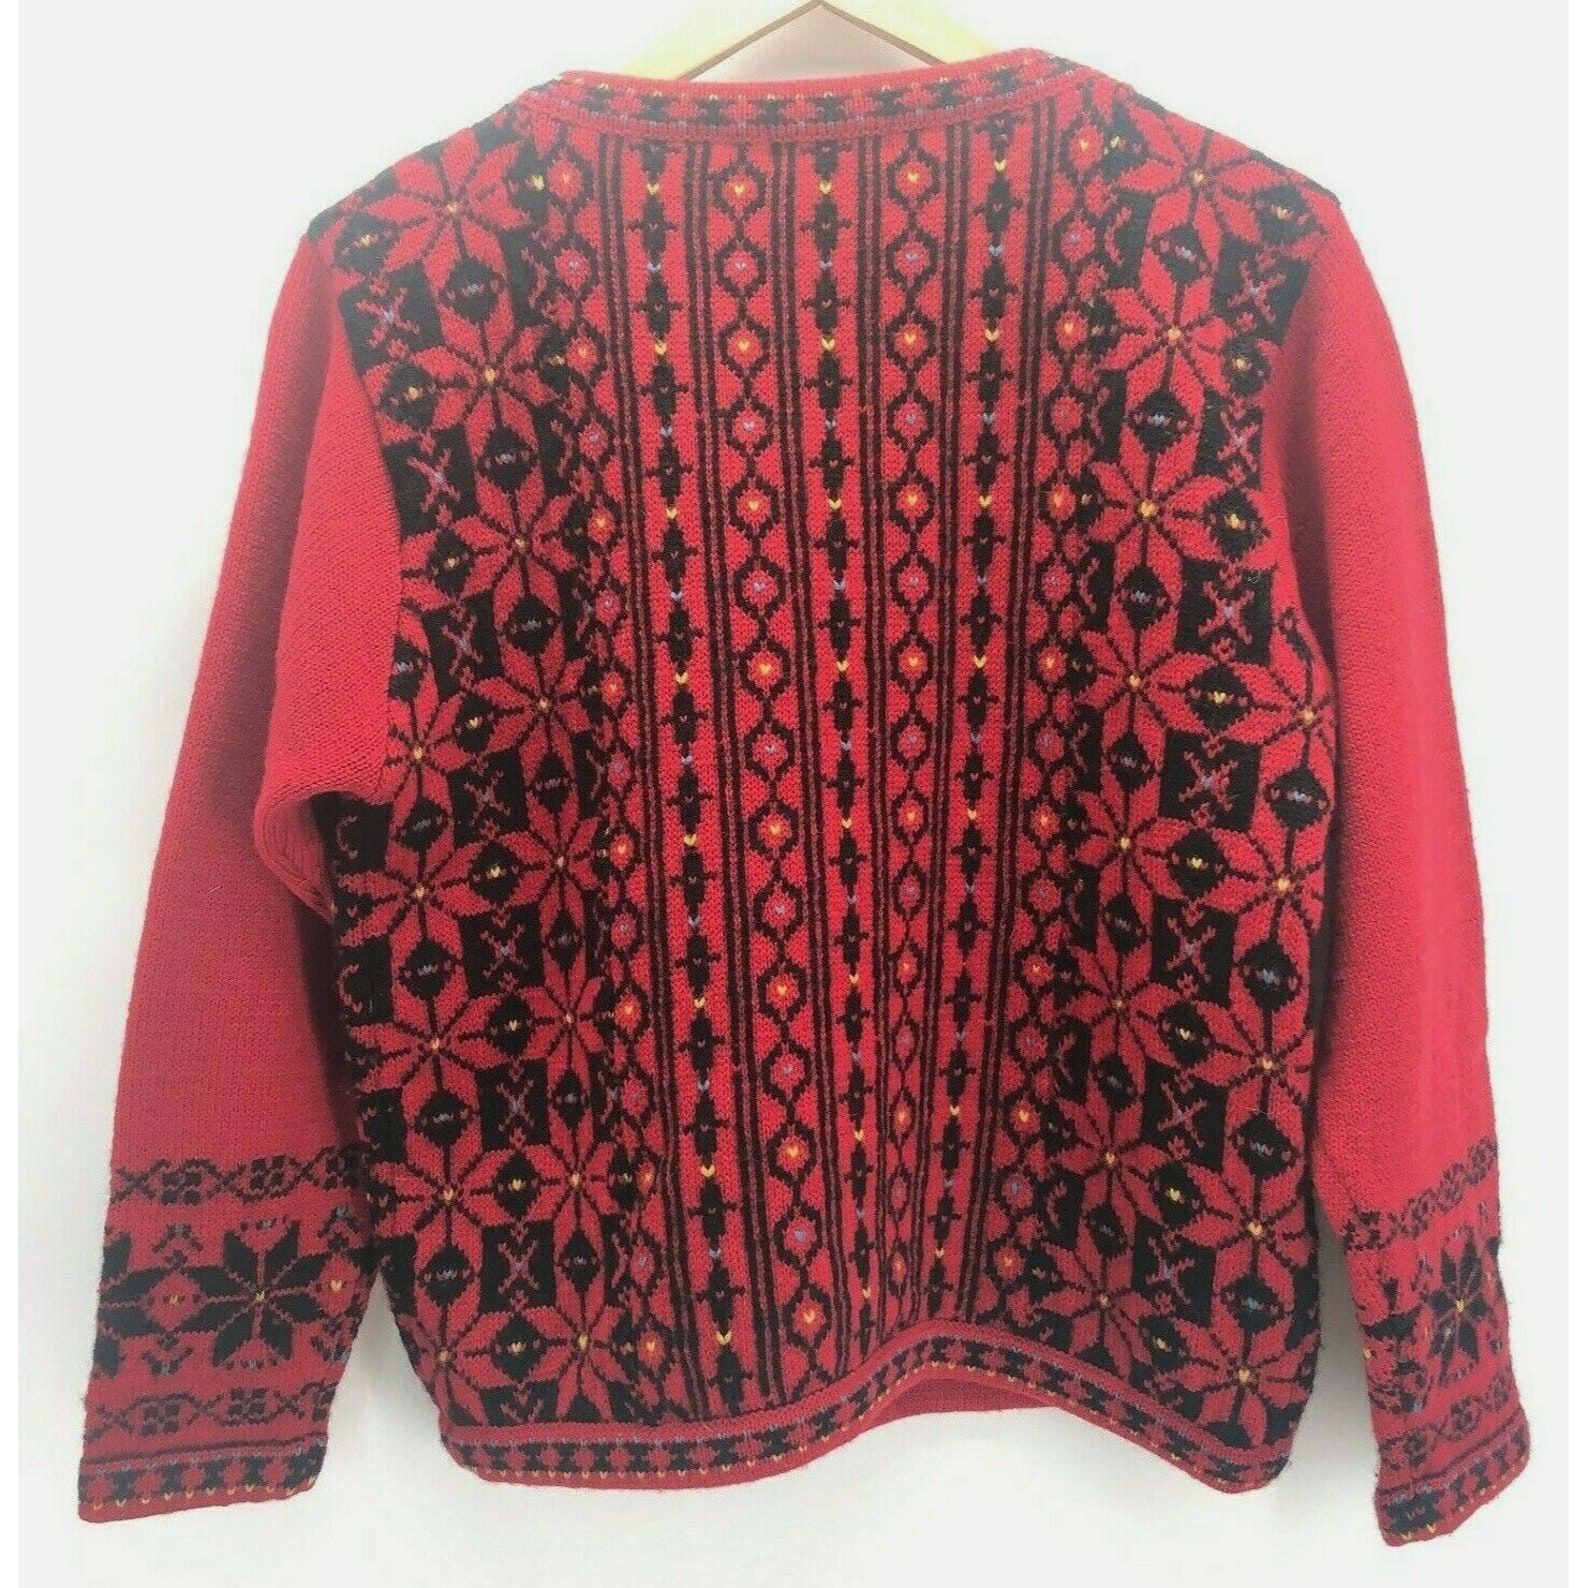 Vintage Vrikke Cardigan Fair Isle Folk Red Black Wool Pewter - Etsy